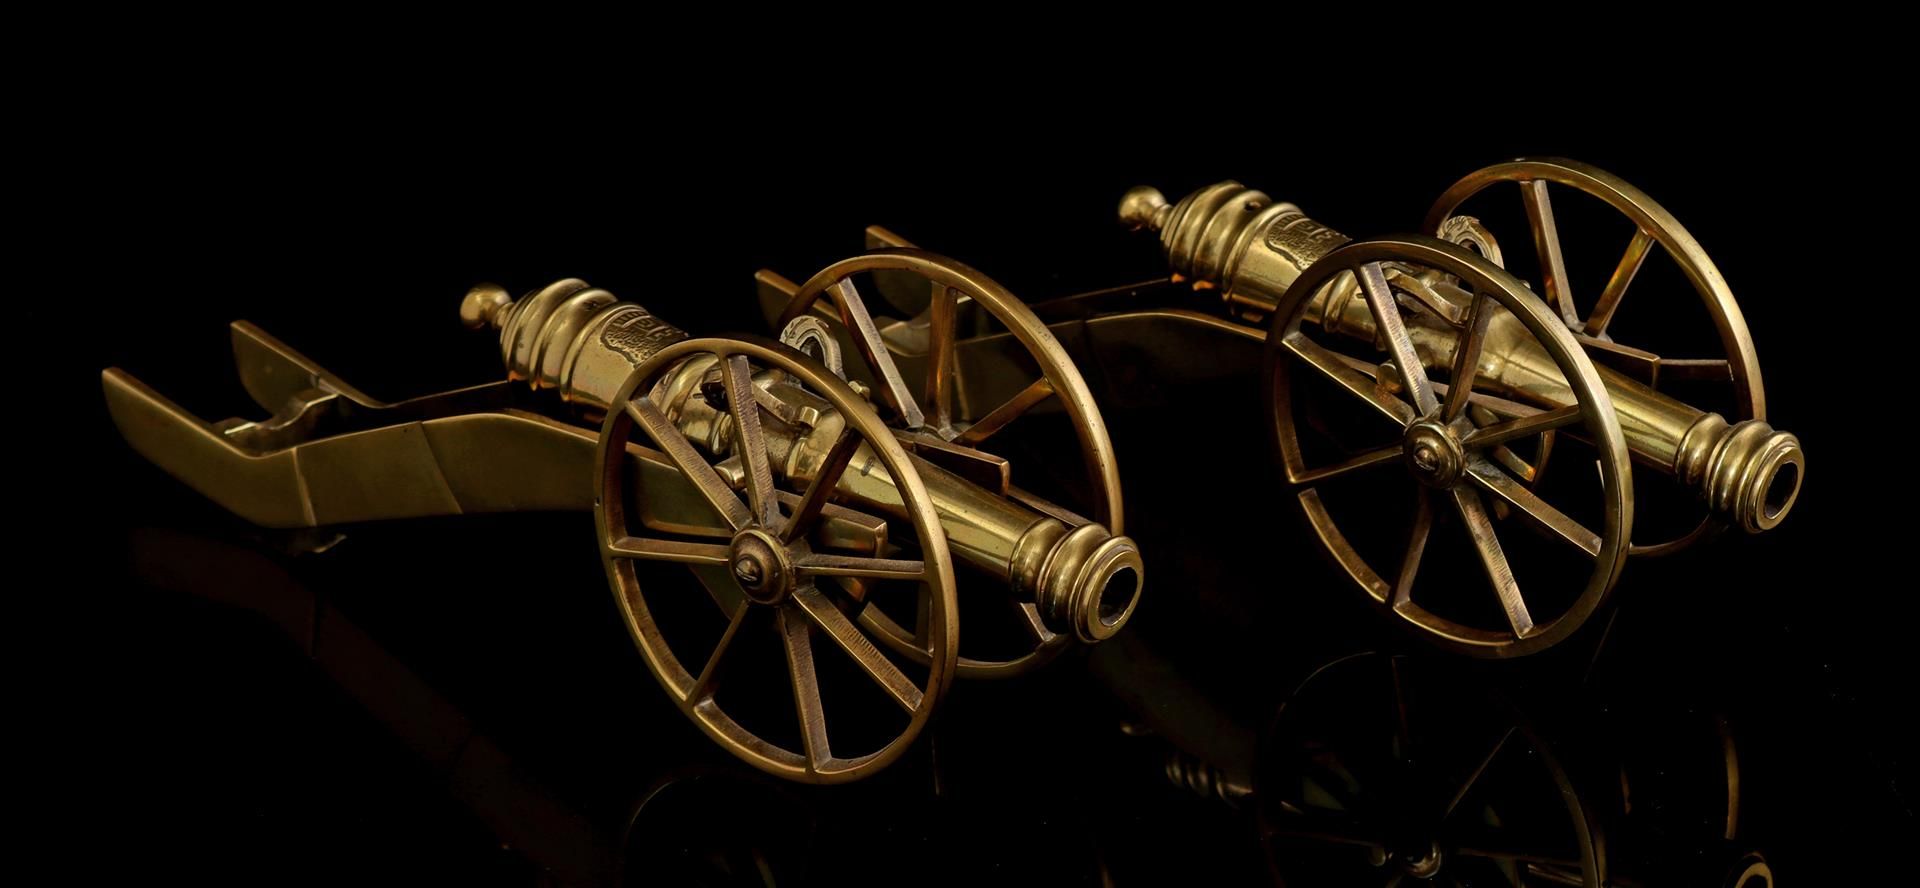 2 brass miniature cannons